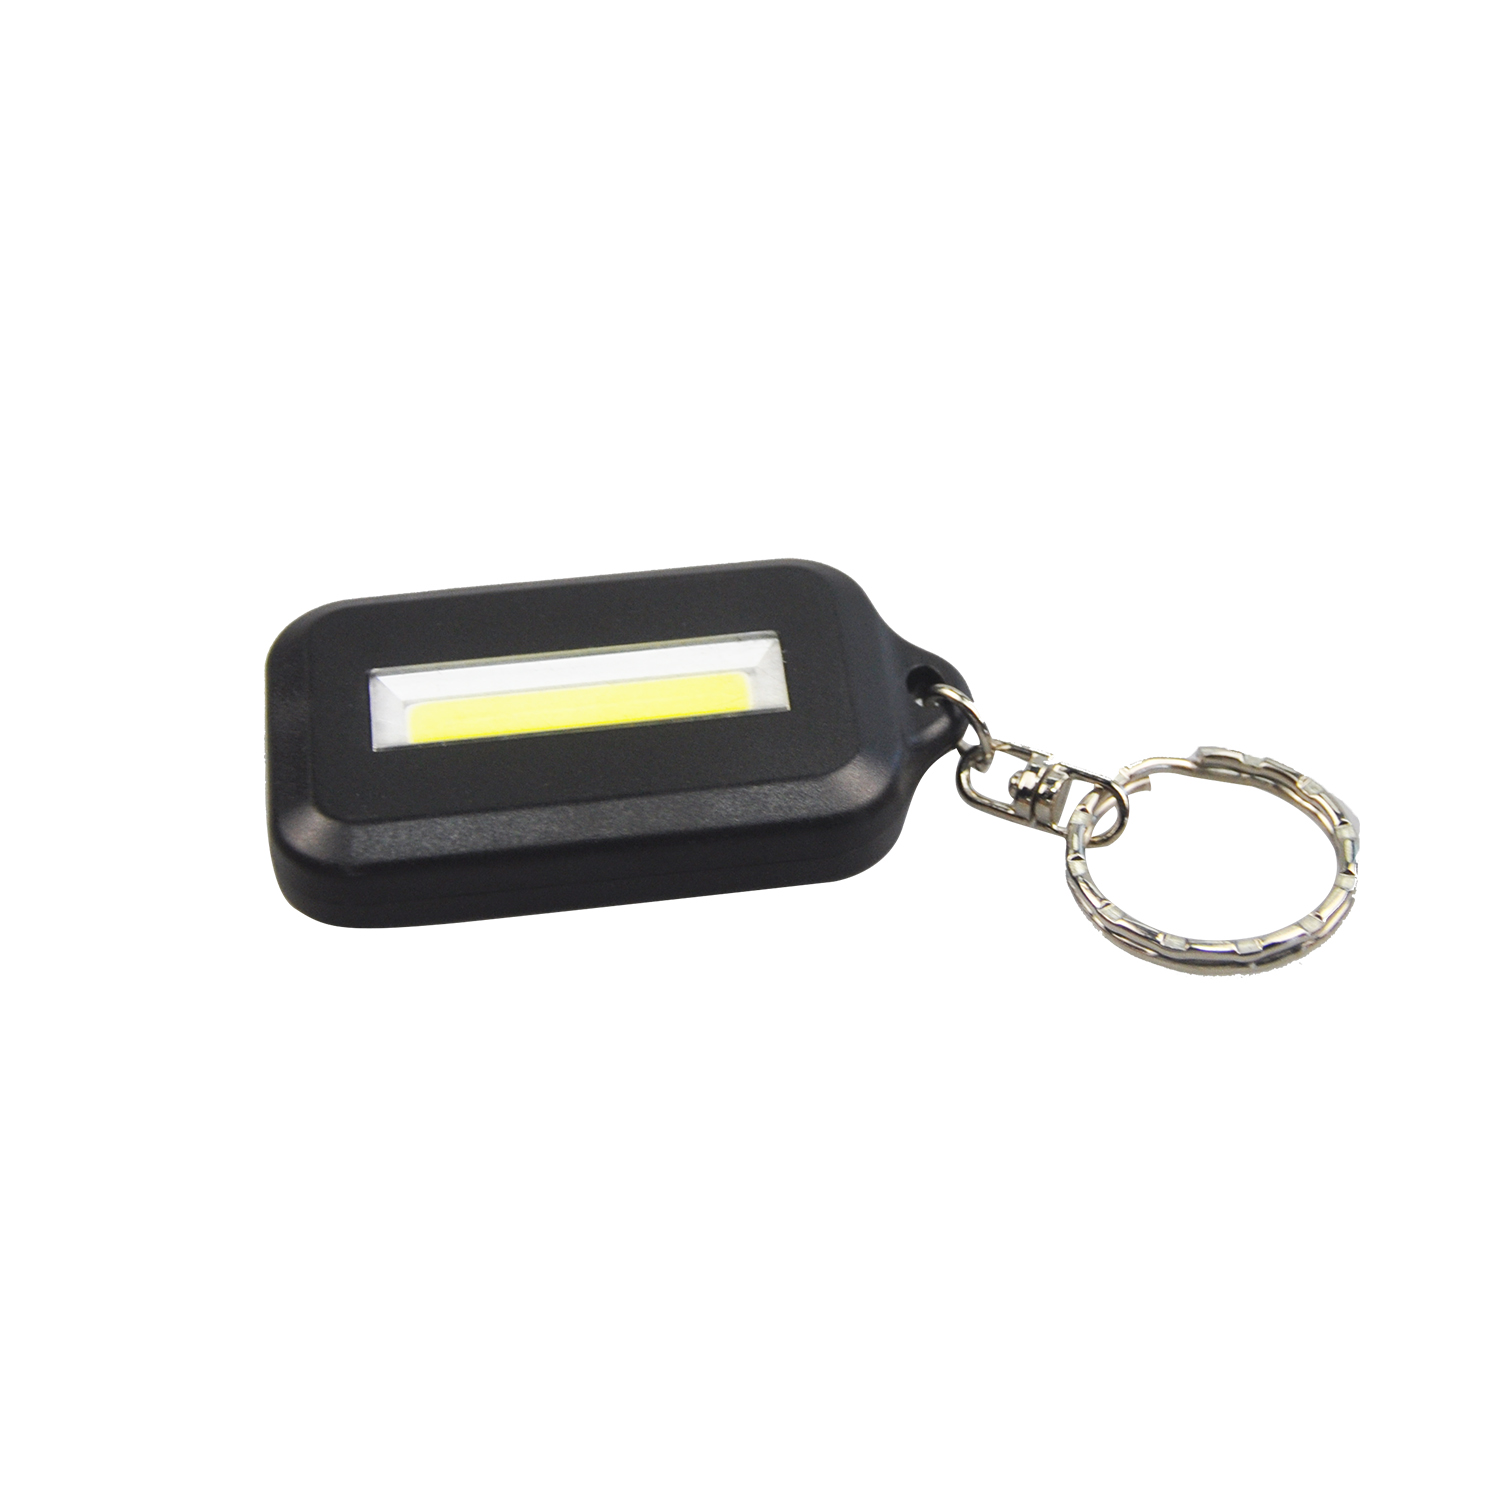 Portable Mini COB LED Camping Outdoor Flashlight Keychain Handy Light